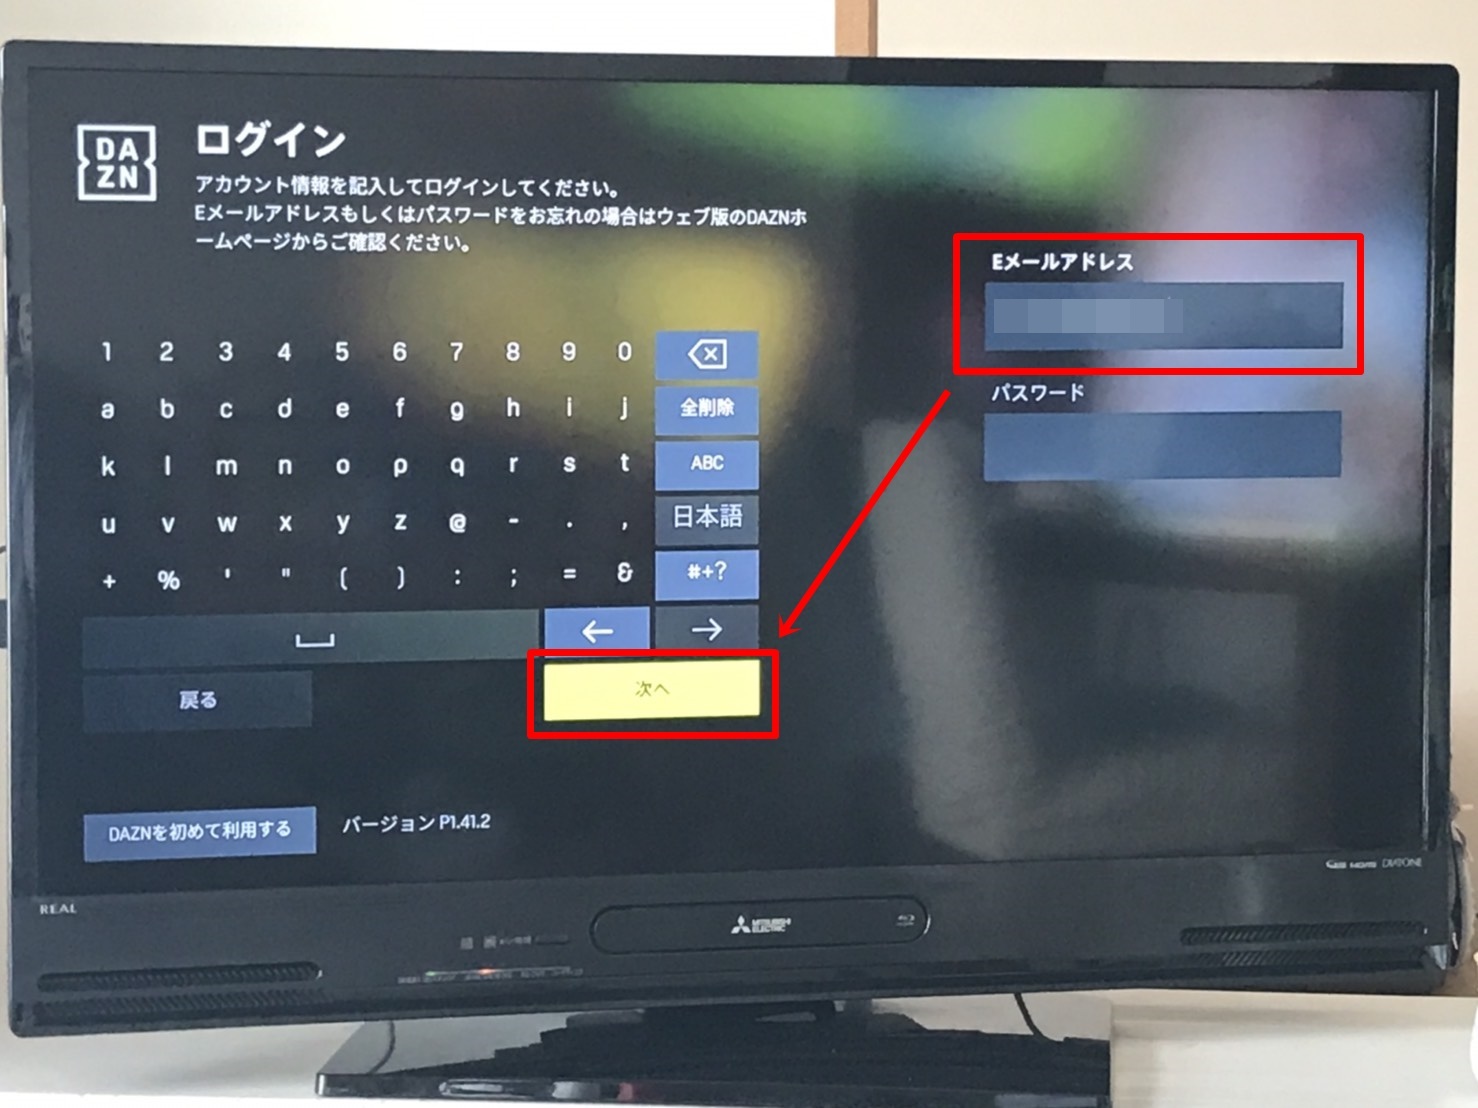 DAZNをテレビで見る方法【Amazon Fire TV Stick編】